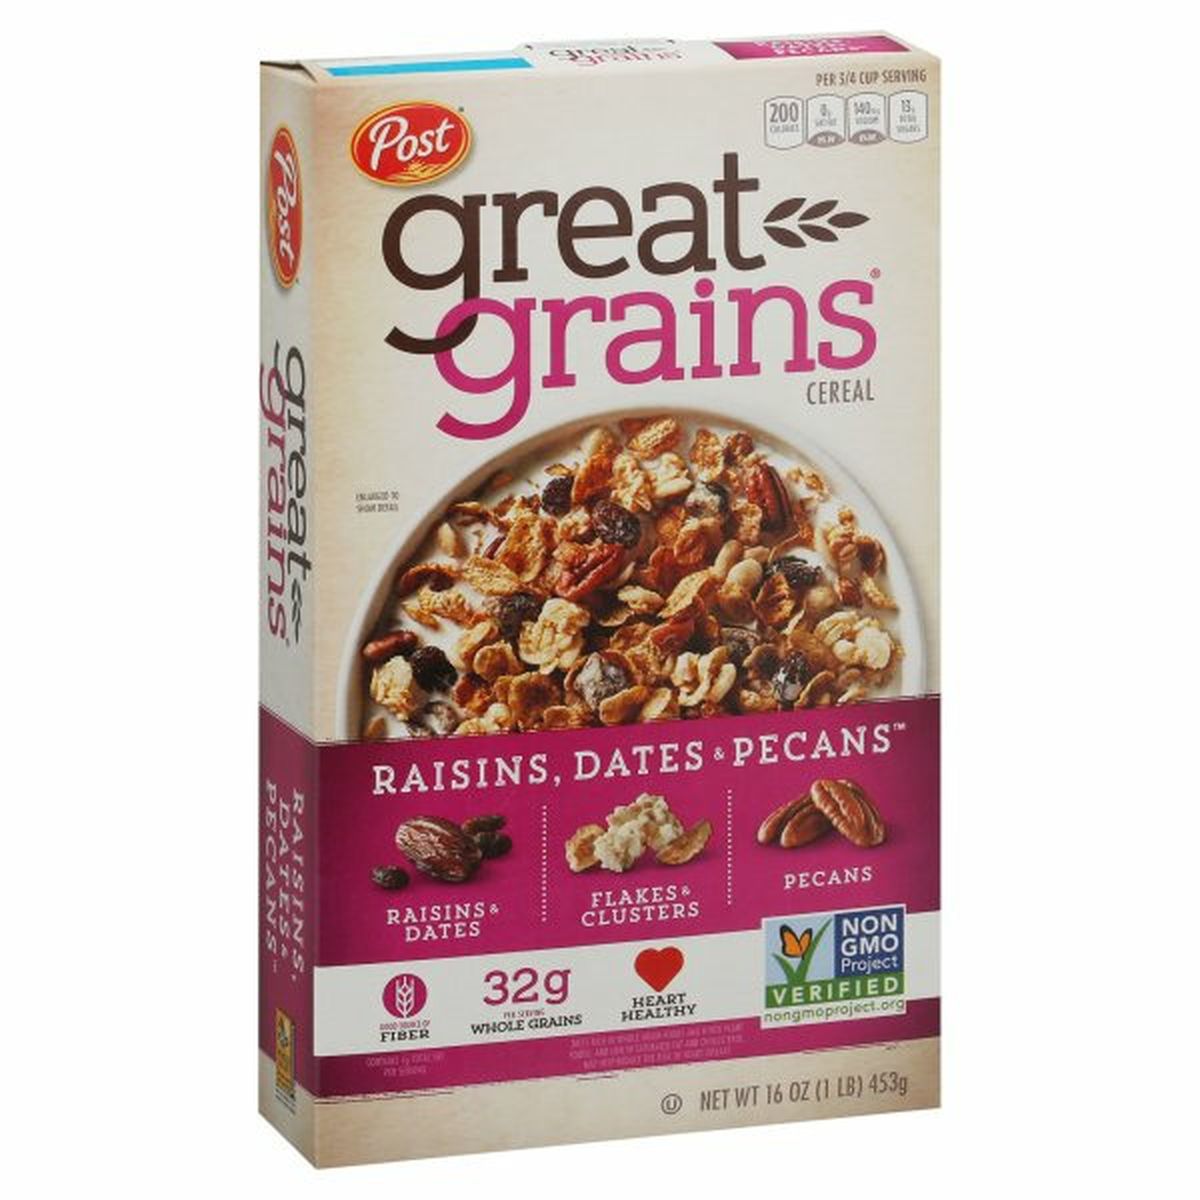 Calories in Great Grains Cereal, Raisins, Dates & Pecans